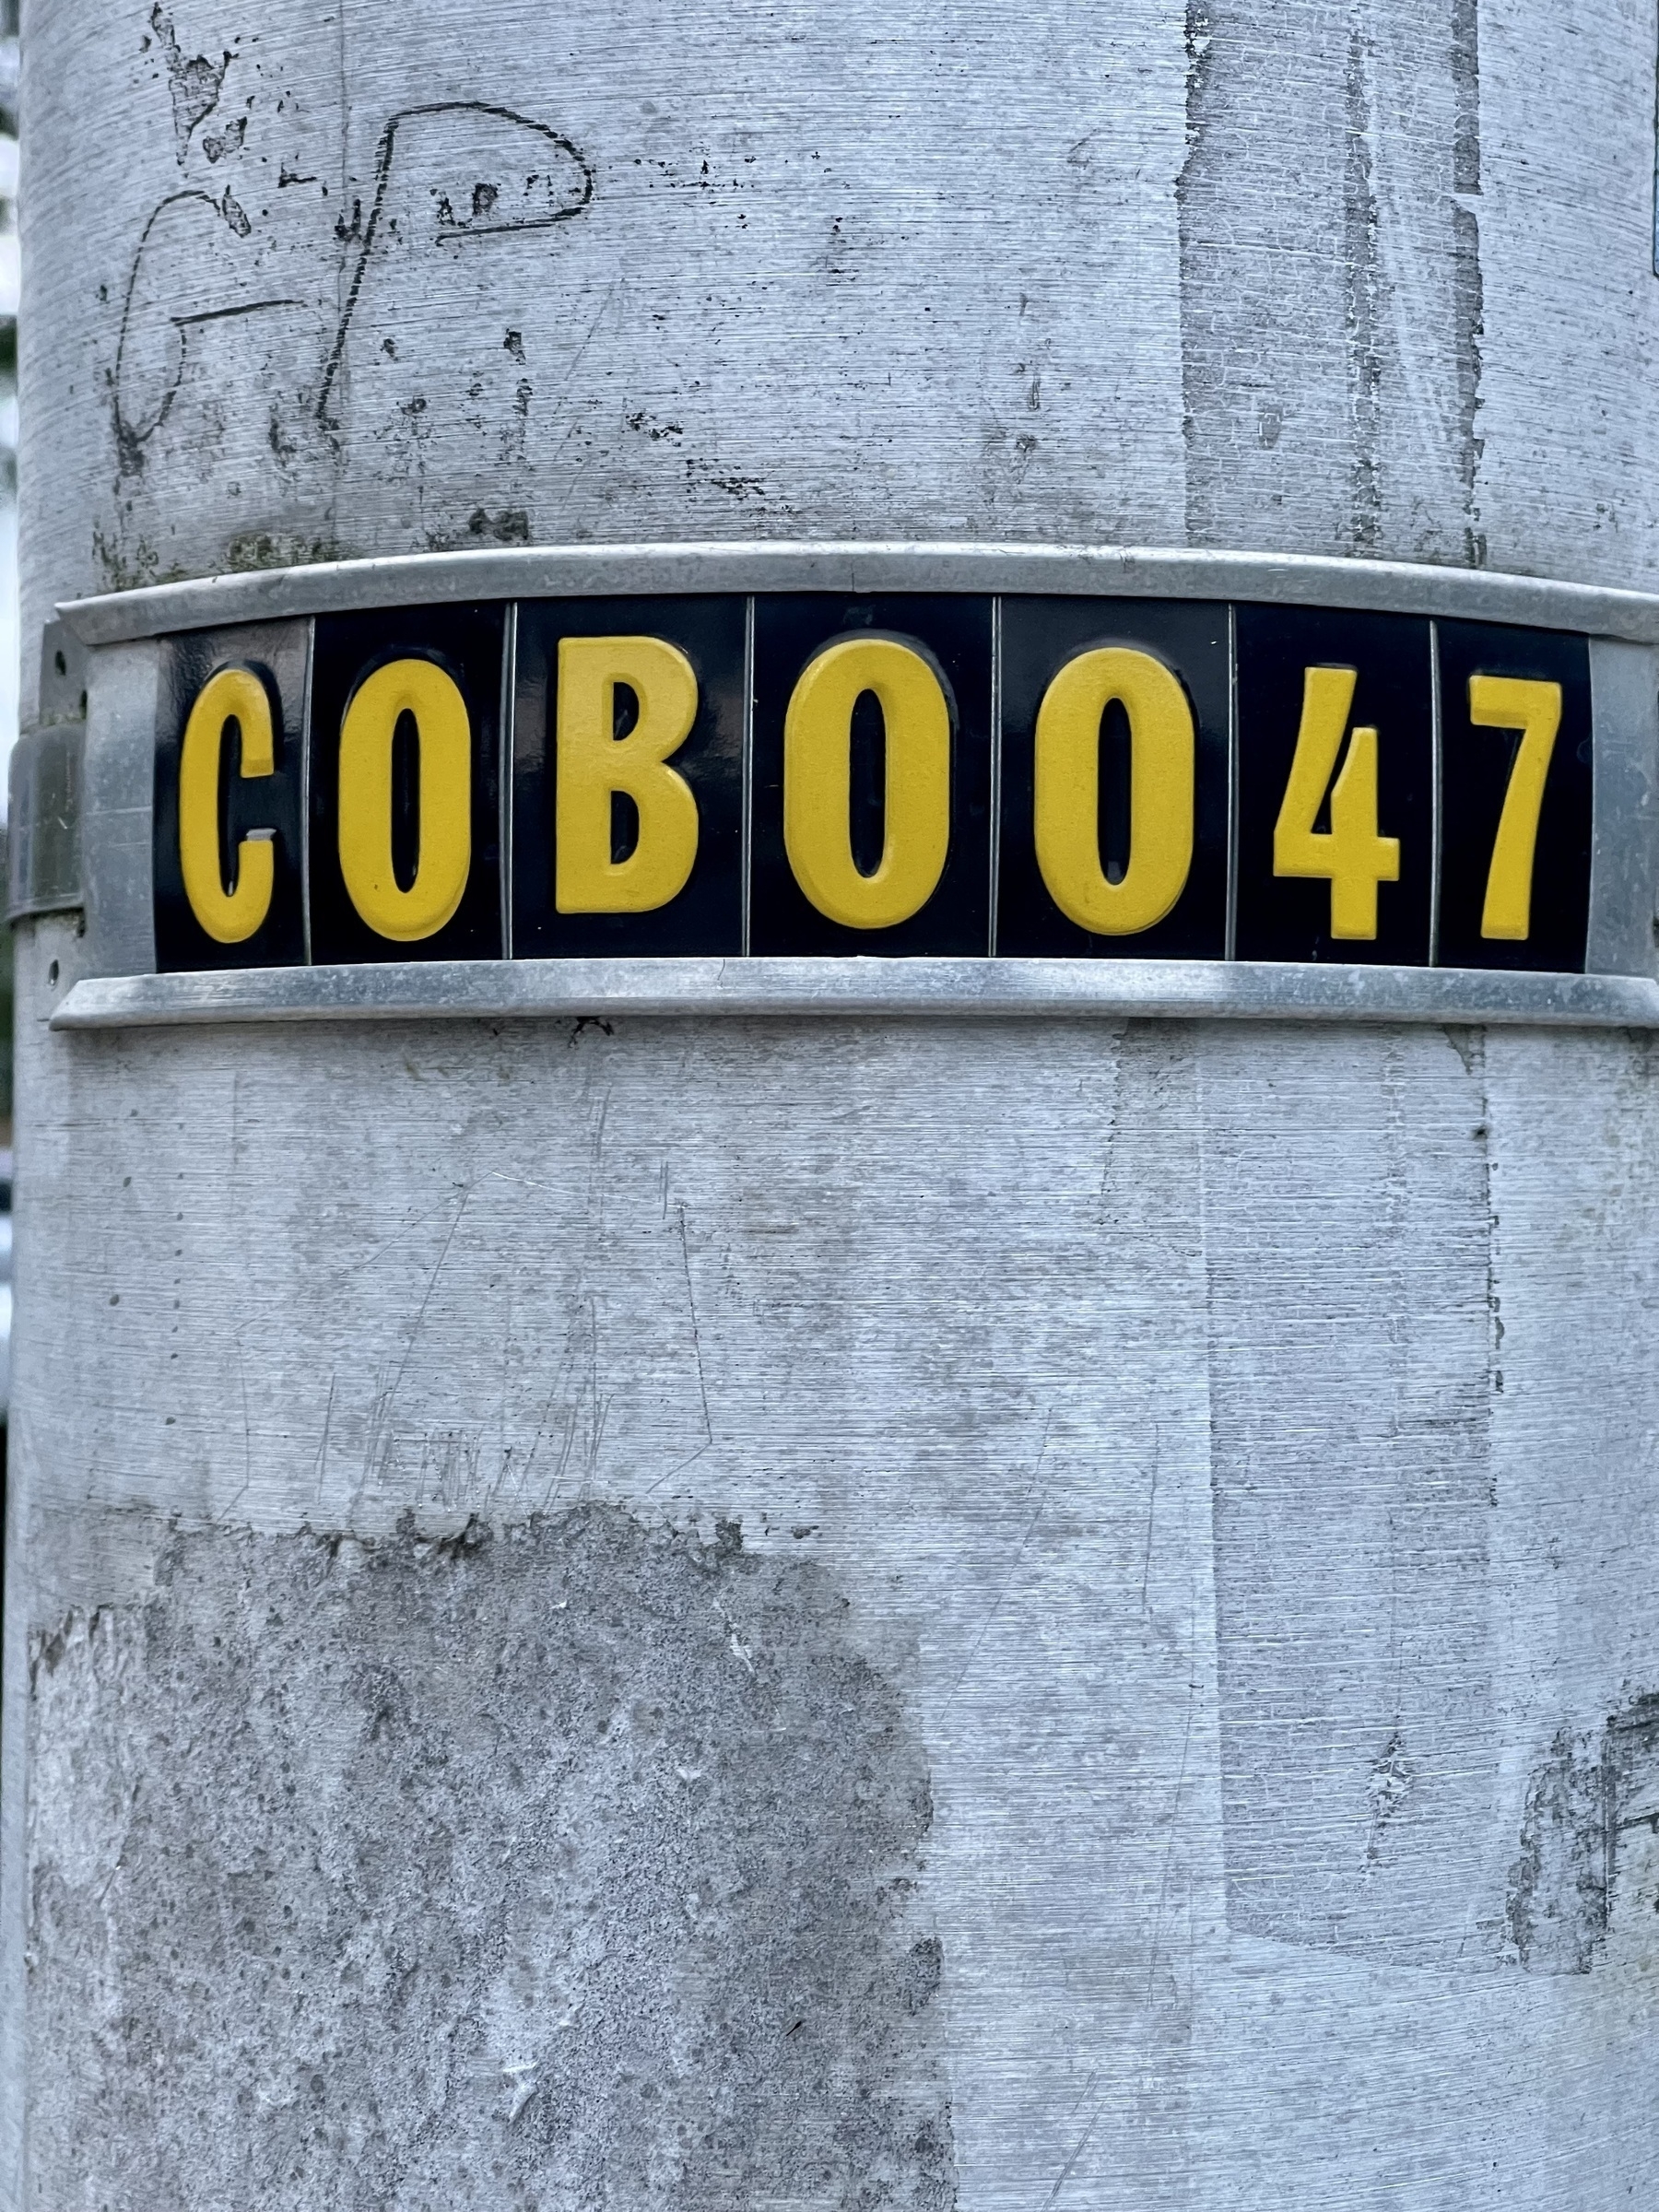 COB0047 metal identification plate on a metal utility pole.